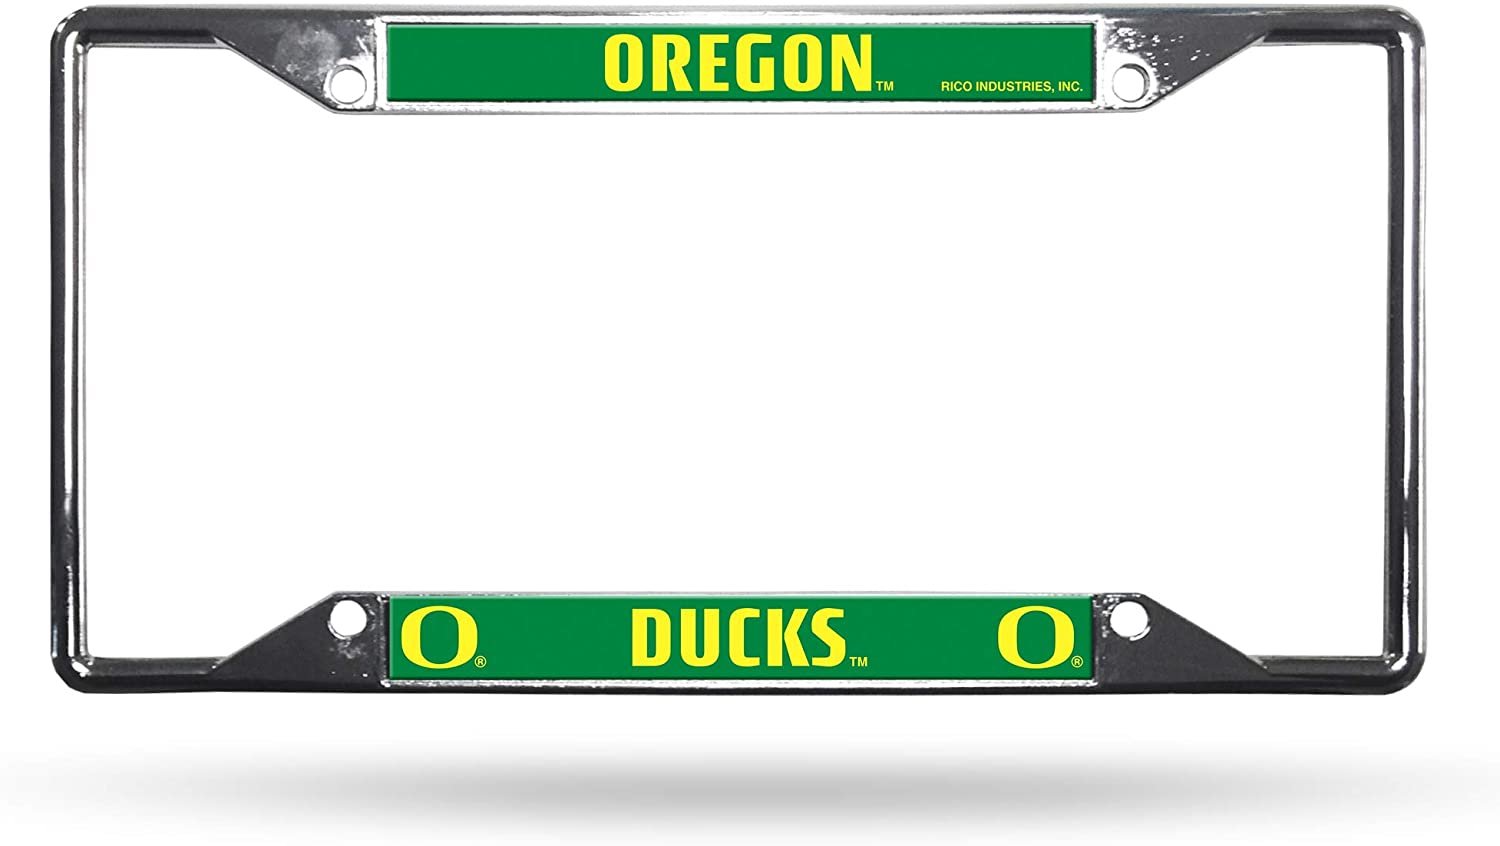 University of Oregon Ducks Metal License Plate Frame Chrome Tag Cover, EZ View Design, 12x6 Inch